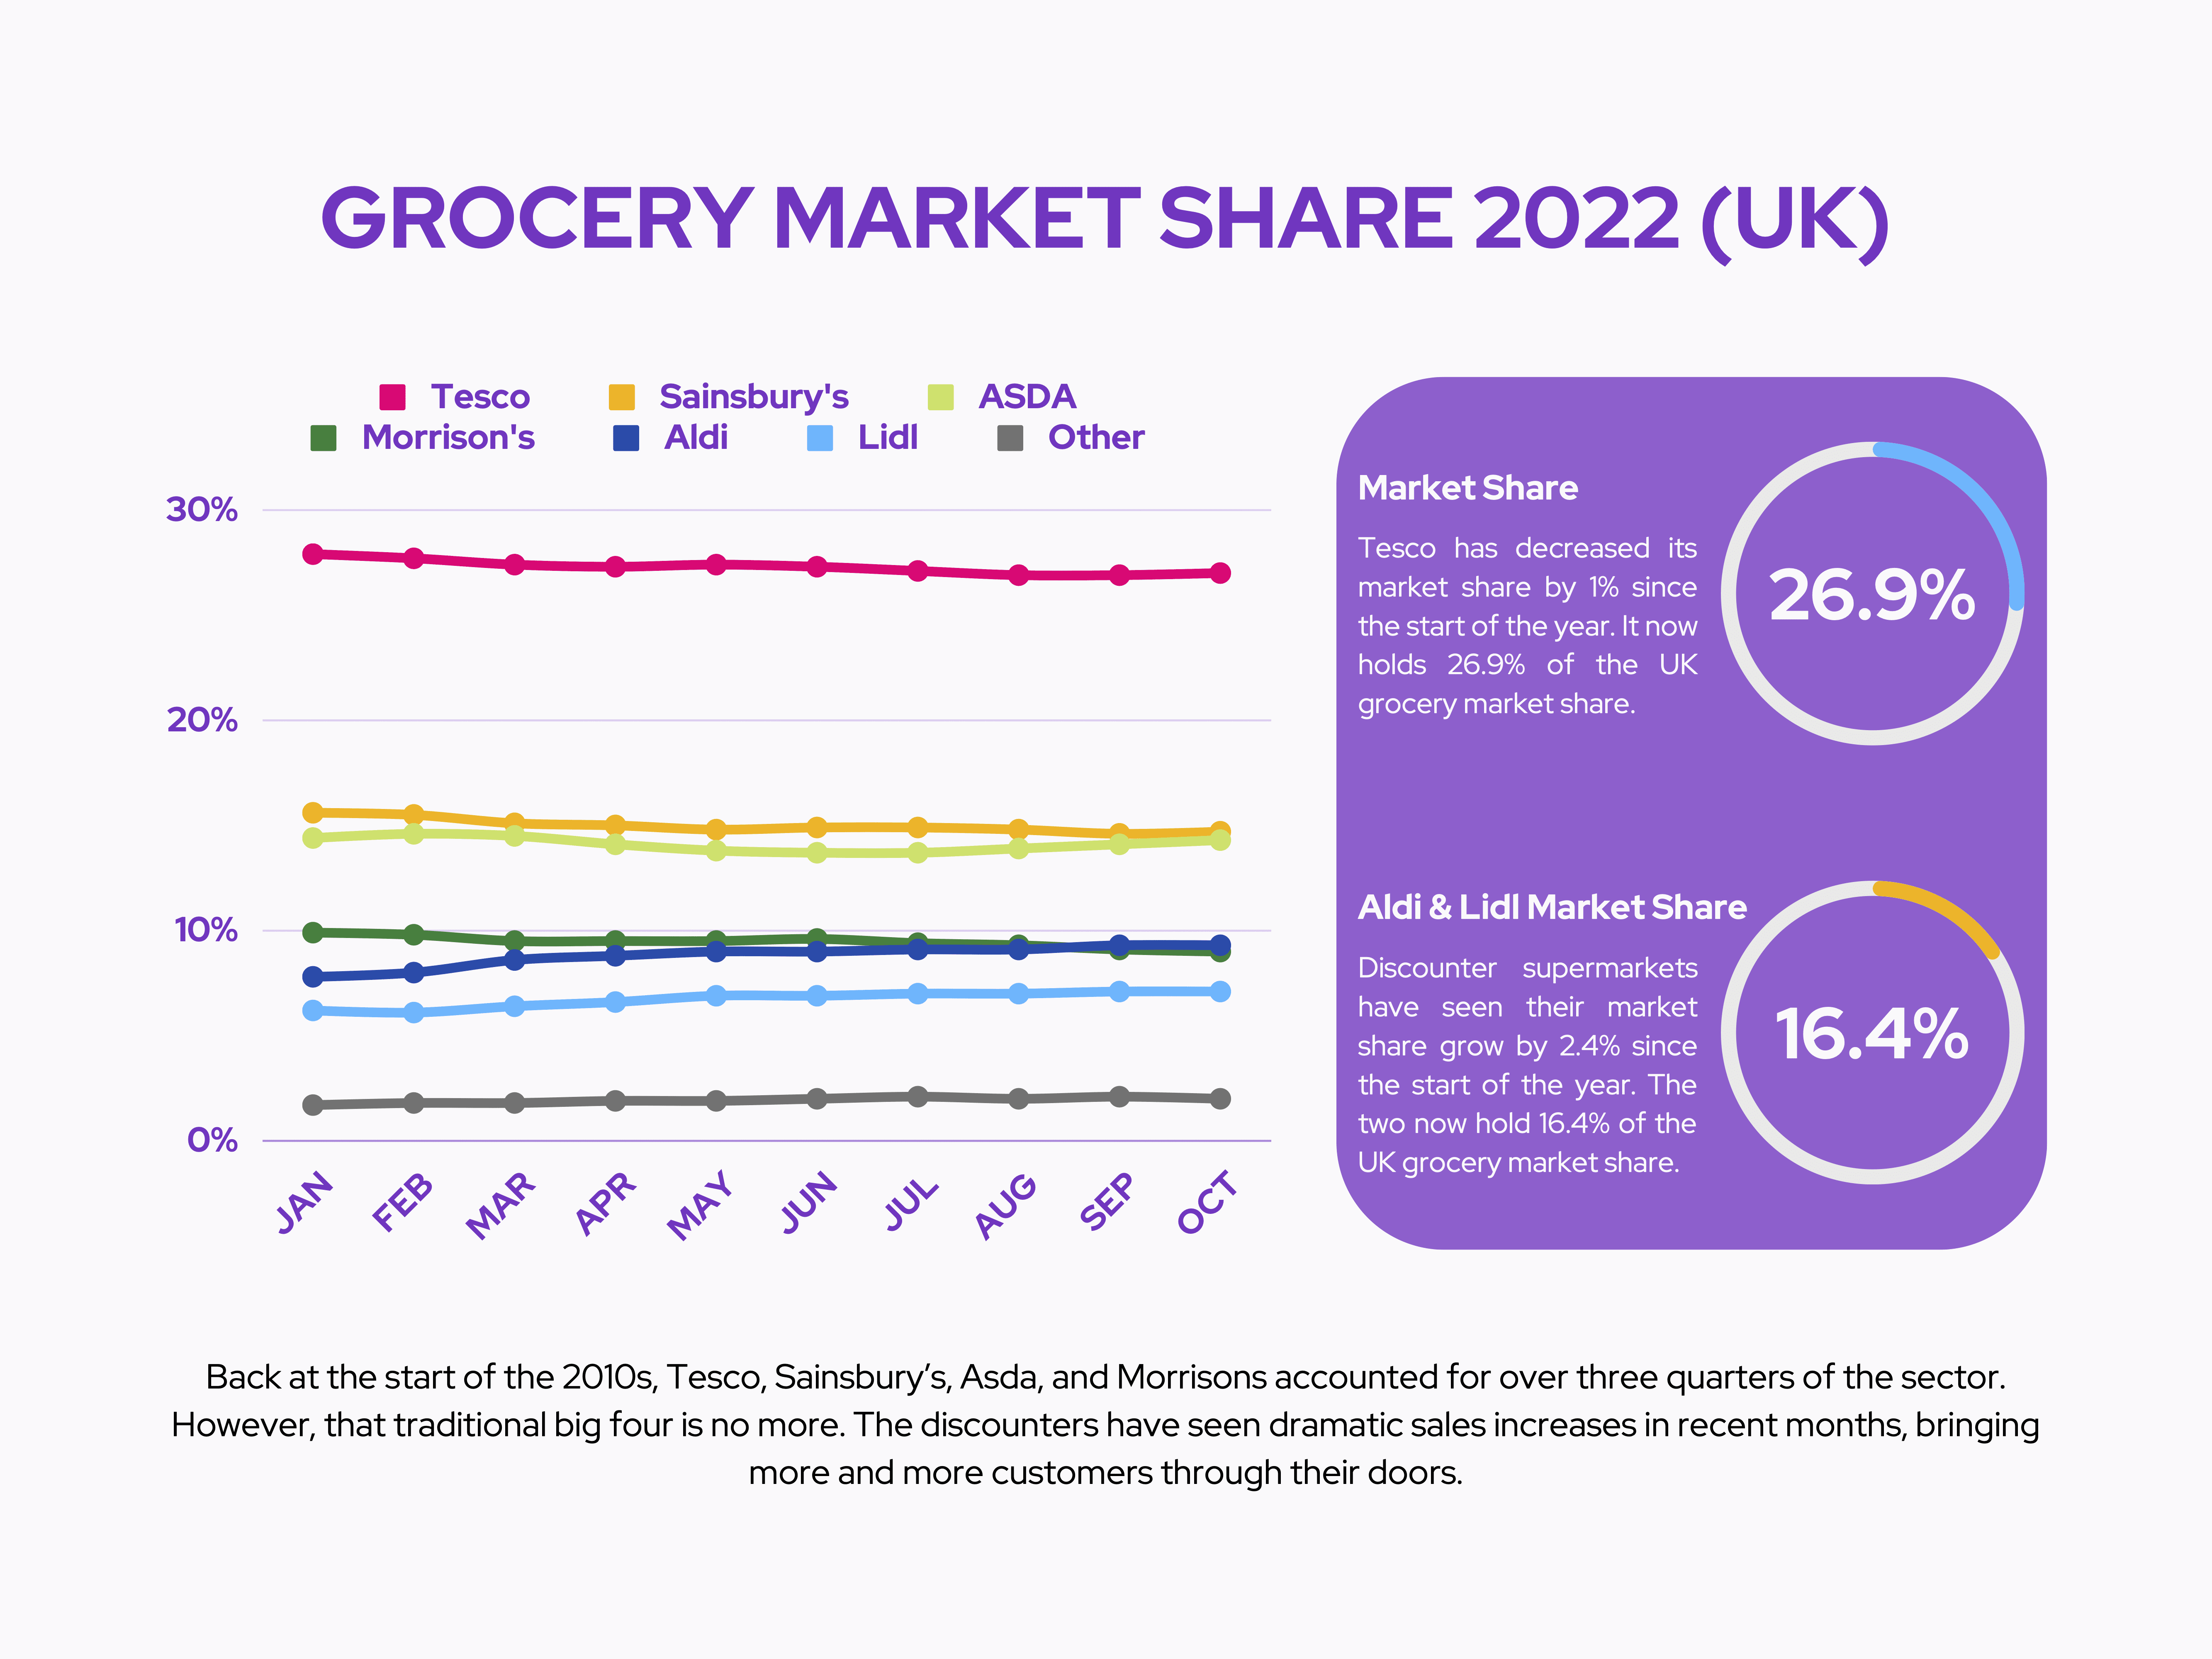 Tesco: Grocery Market Share 2022 (UK)